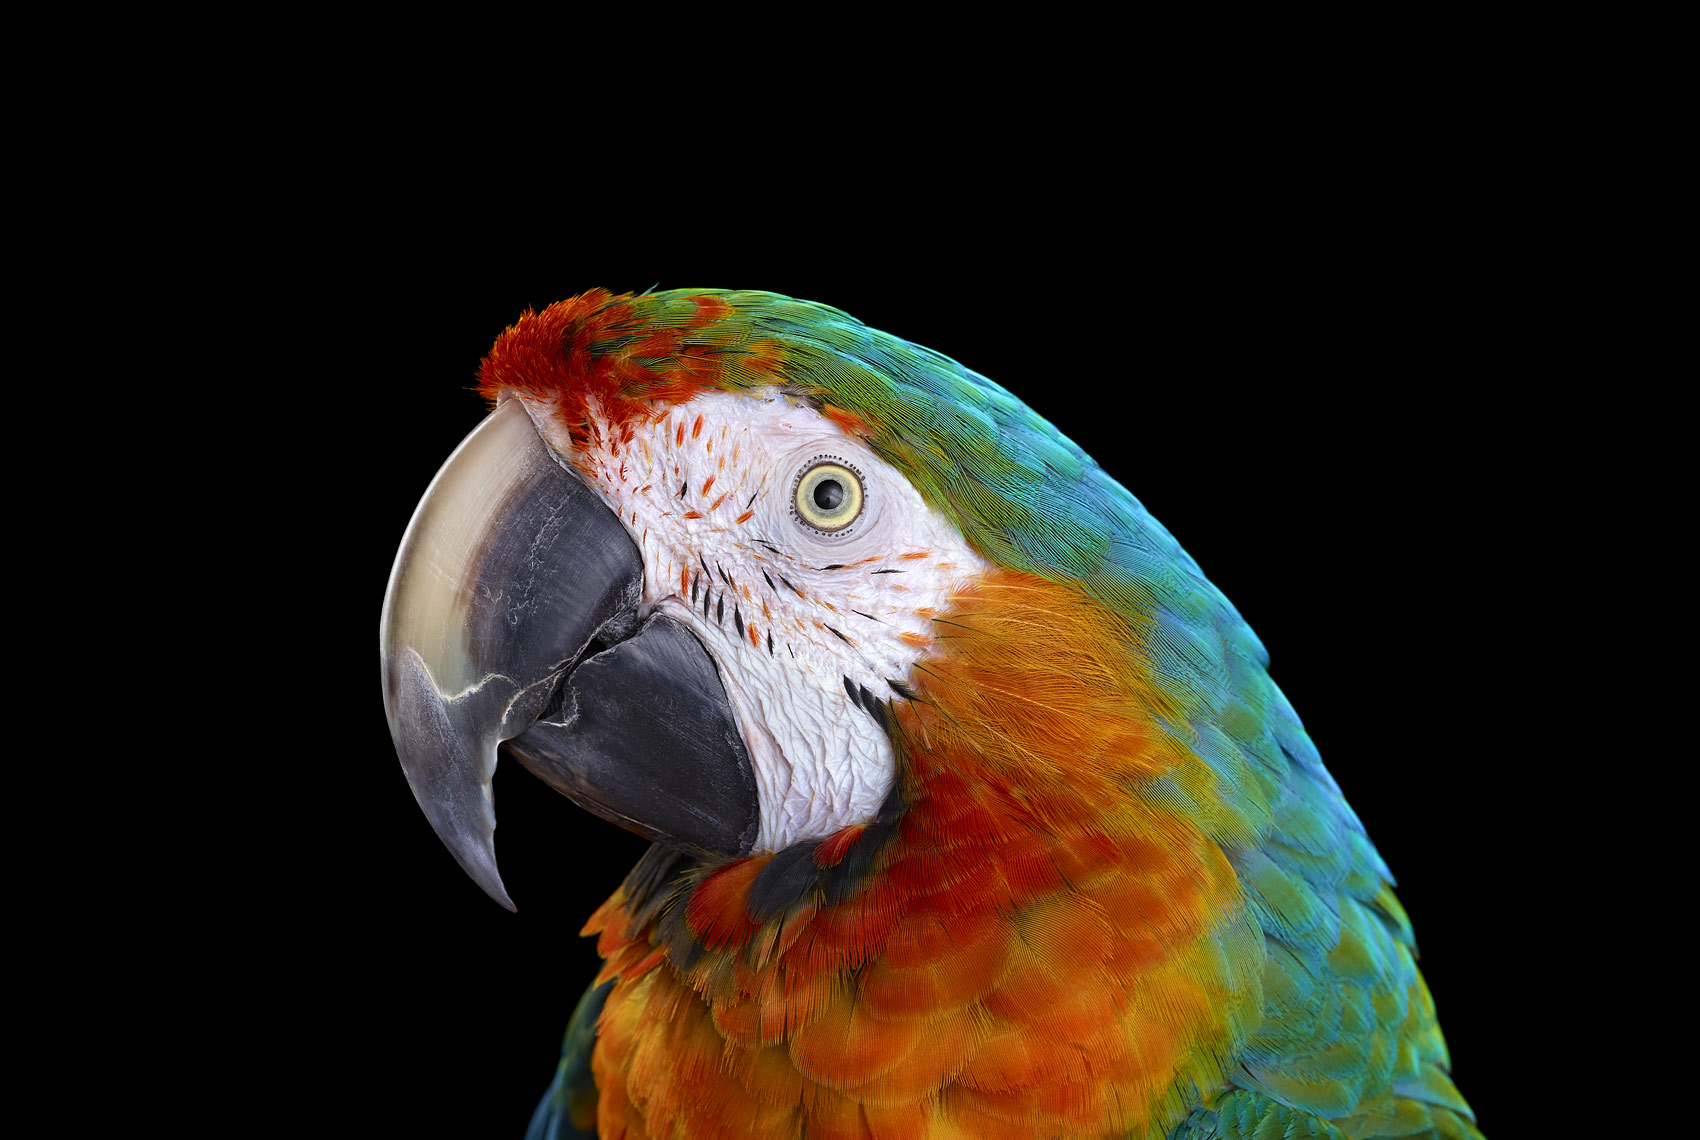 Catalina macaw studio portrait by fine art animal photographer Brad Wilson